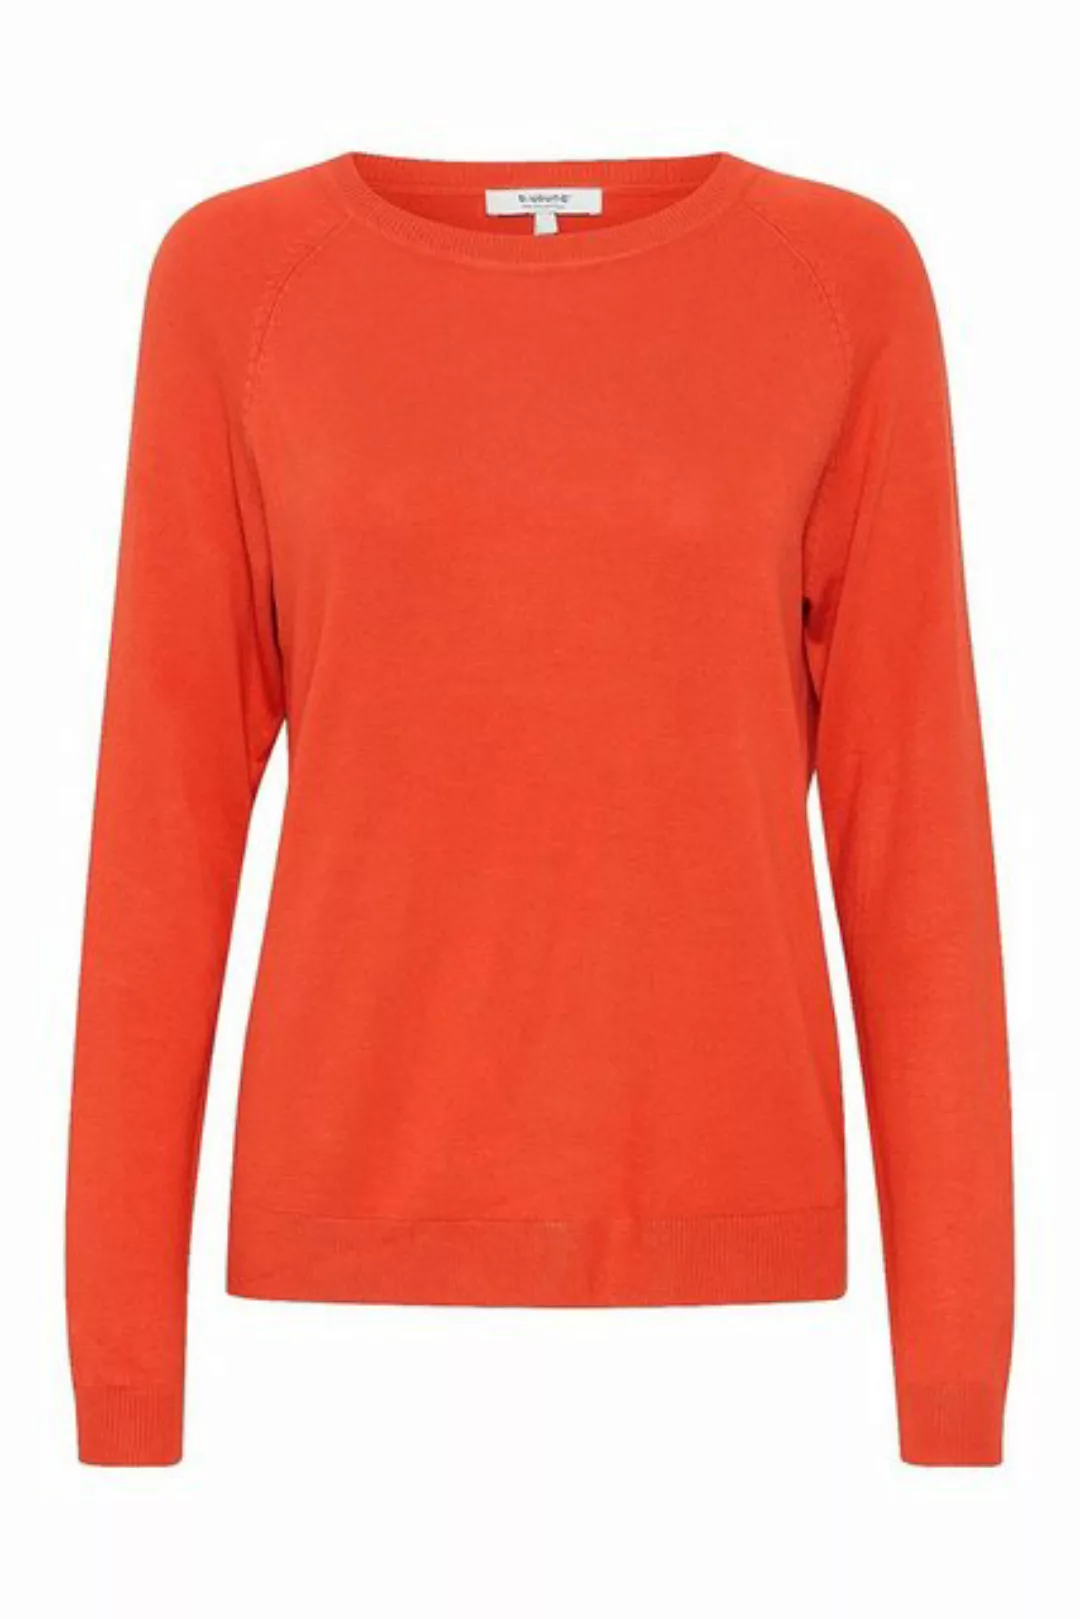 b.young Longpullover Feinstrick Pullover Sweater Shirt BYMMPIMBA1 6279 in R günstig online kaufen